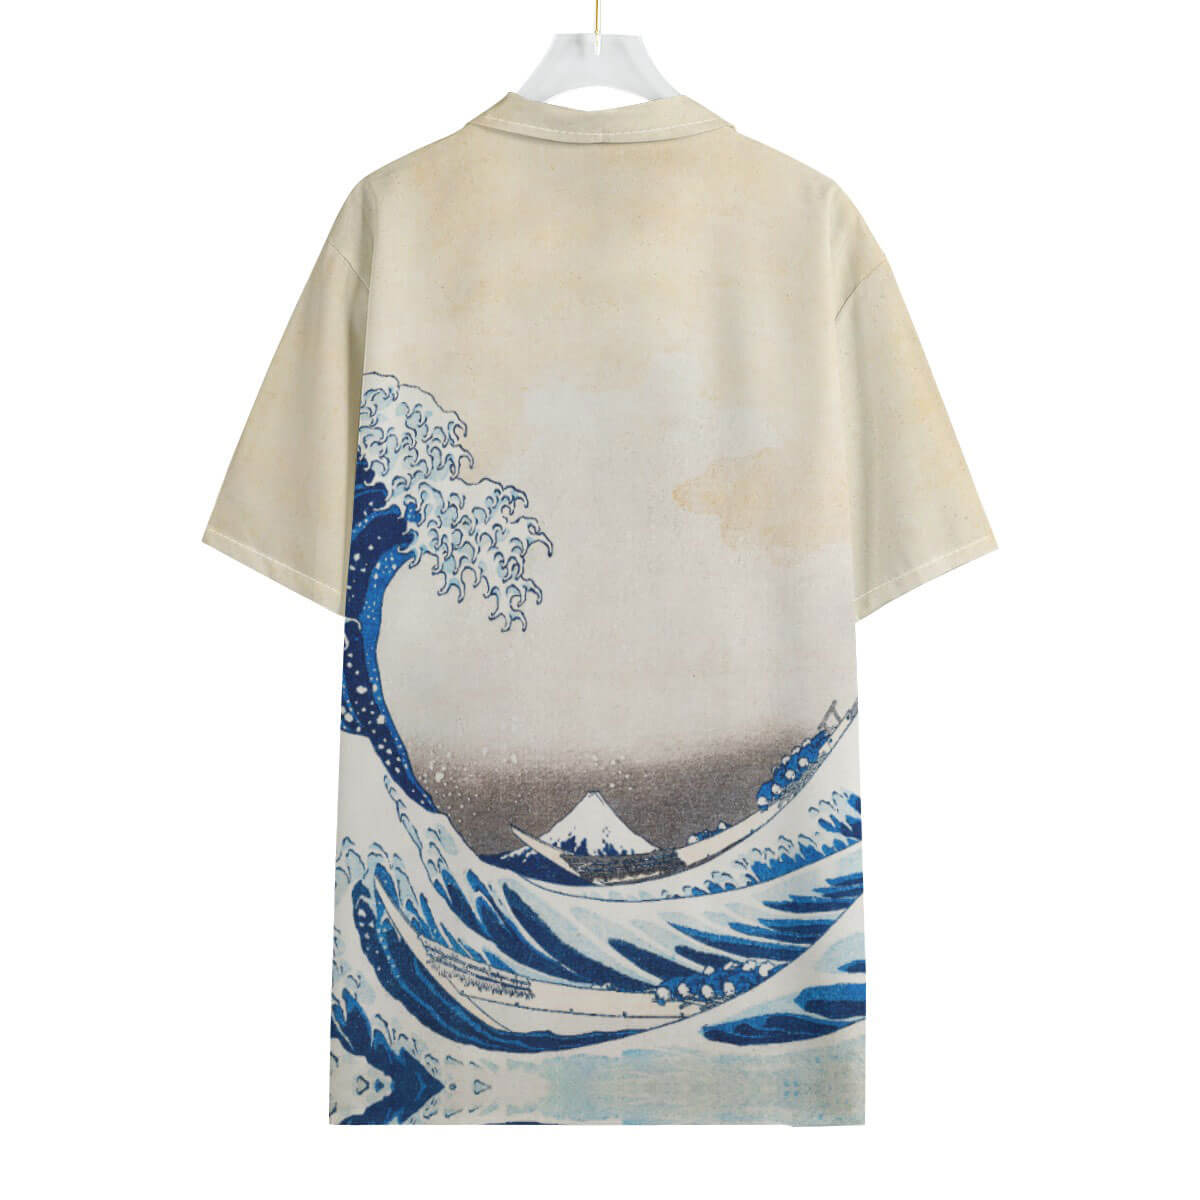 Model wearing Katsushika Hokusai Great Wave t-shirt in casual setting